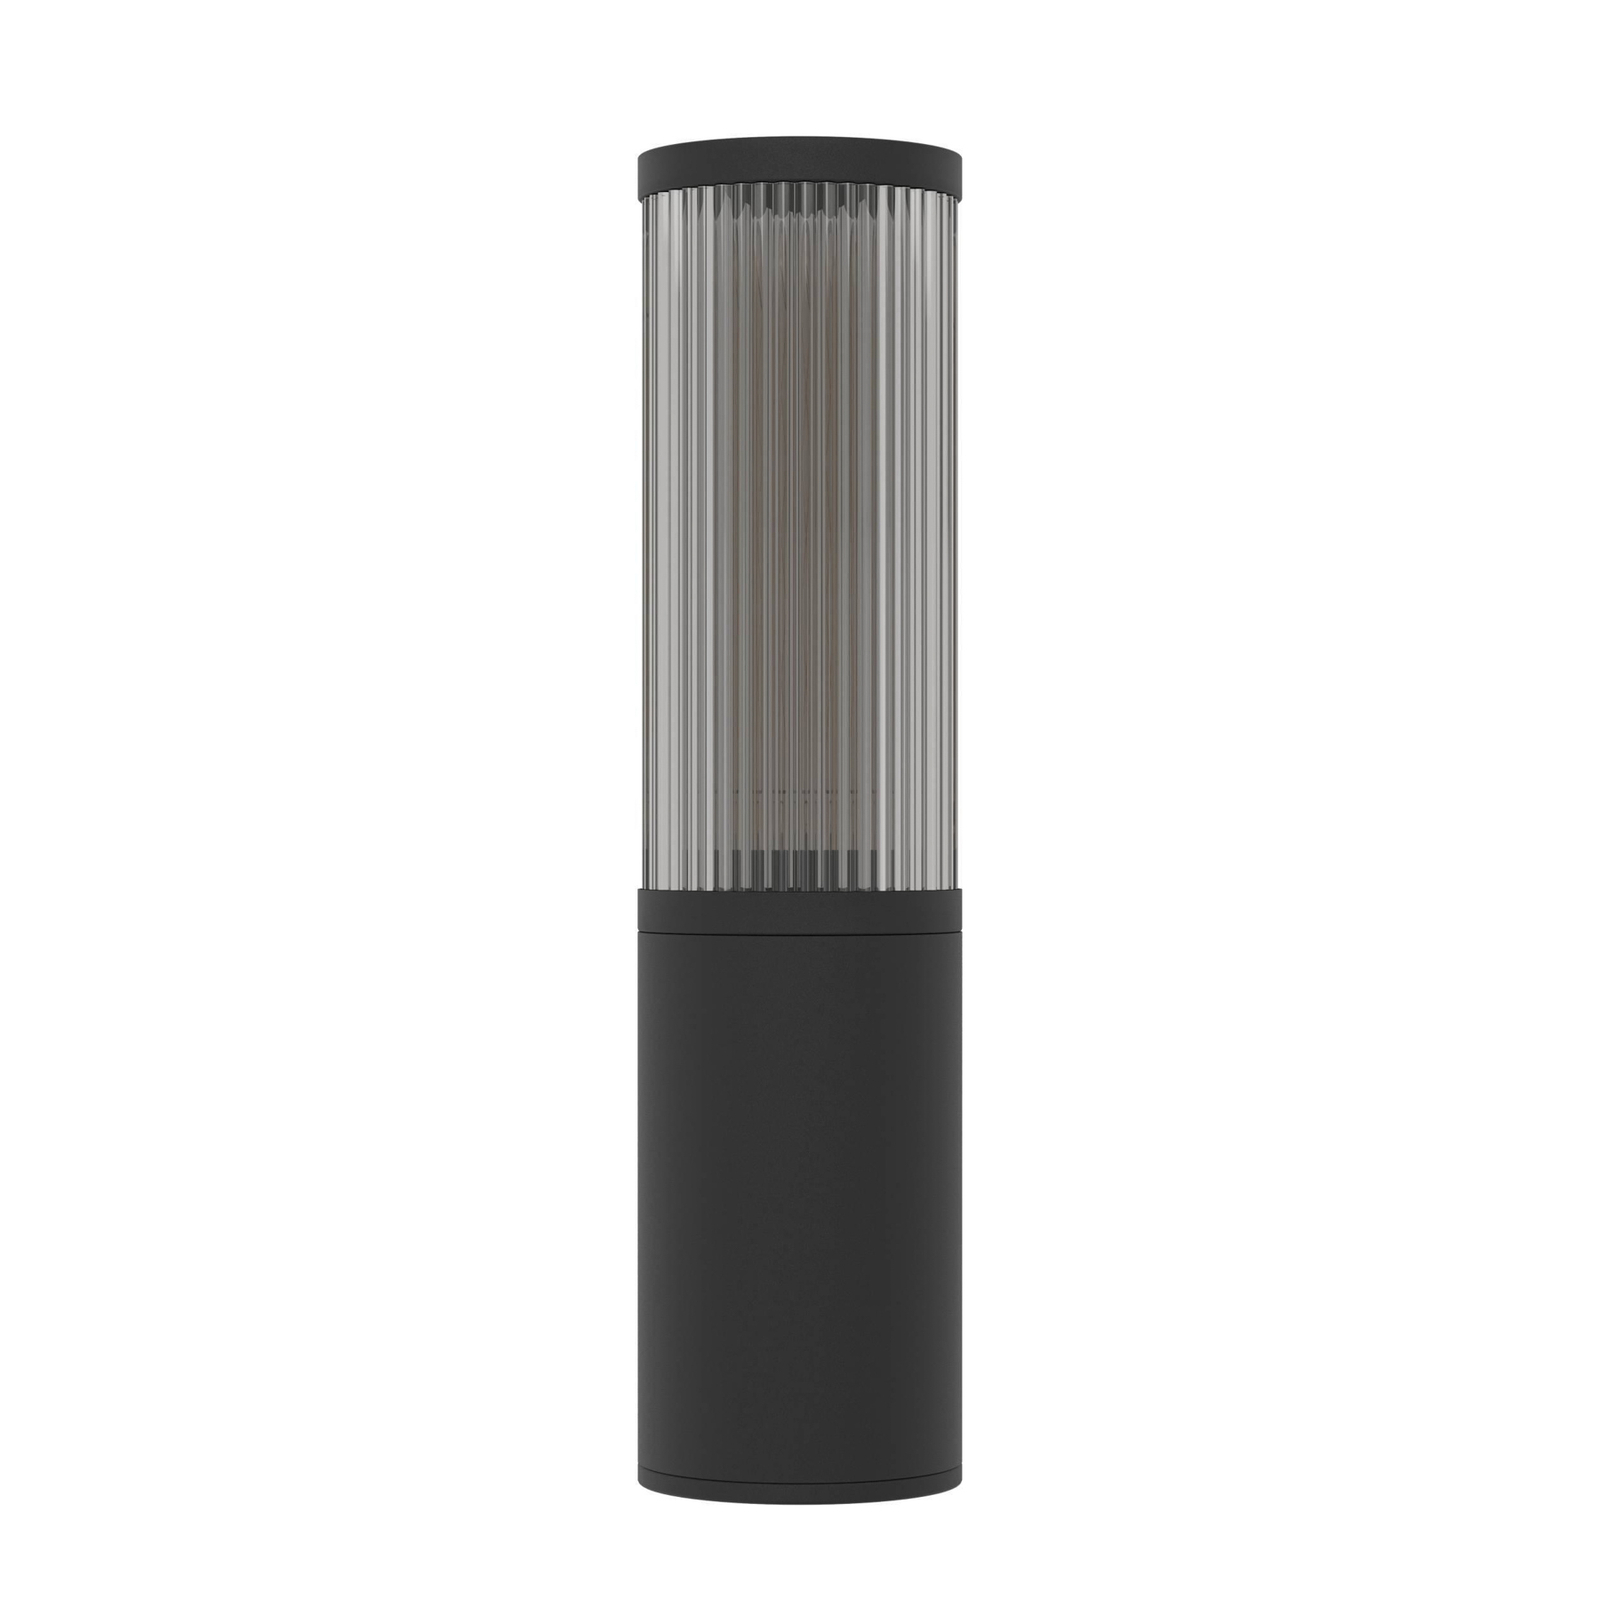 Salle outdoor wall light, height 31 cm, black, aluminium